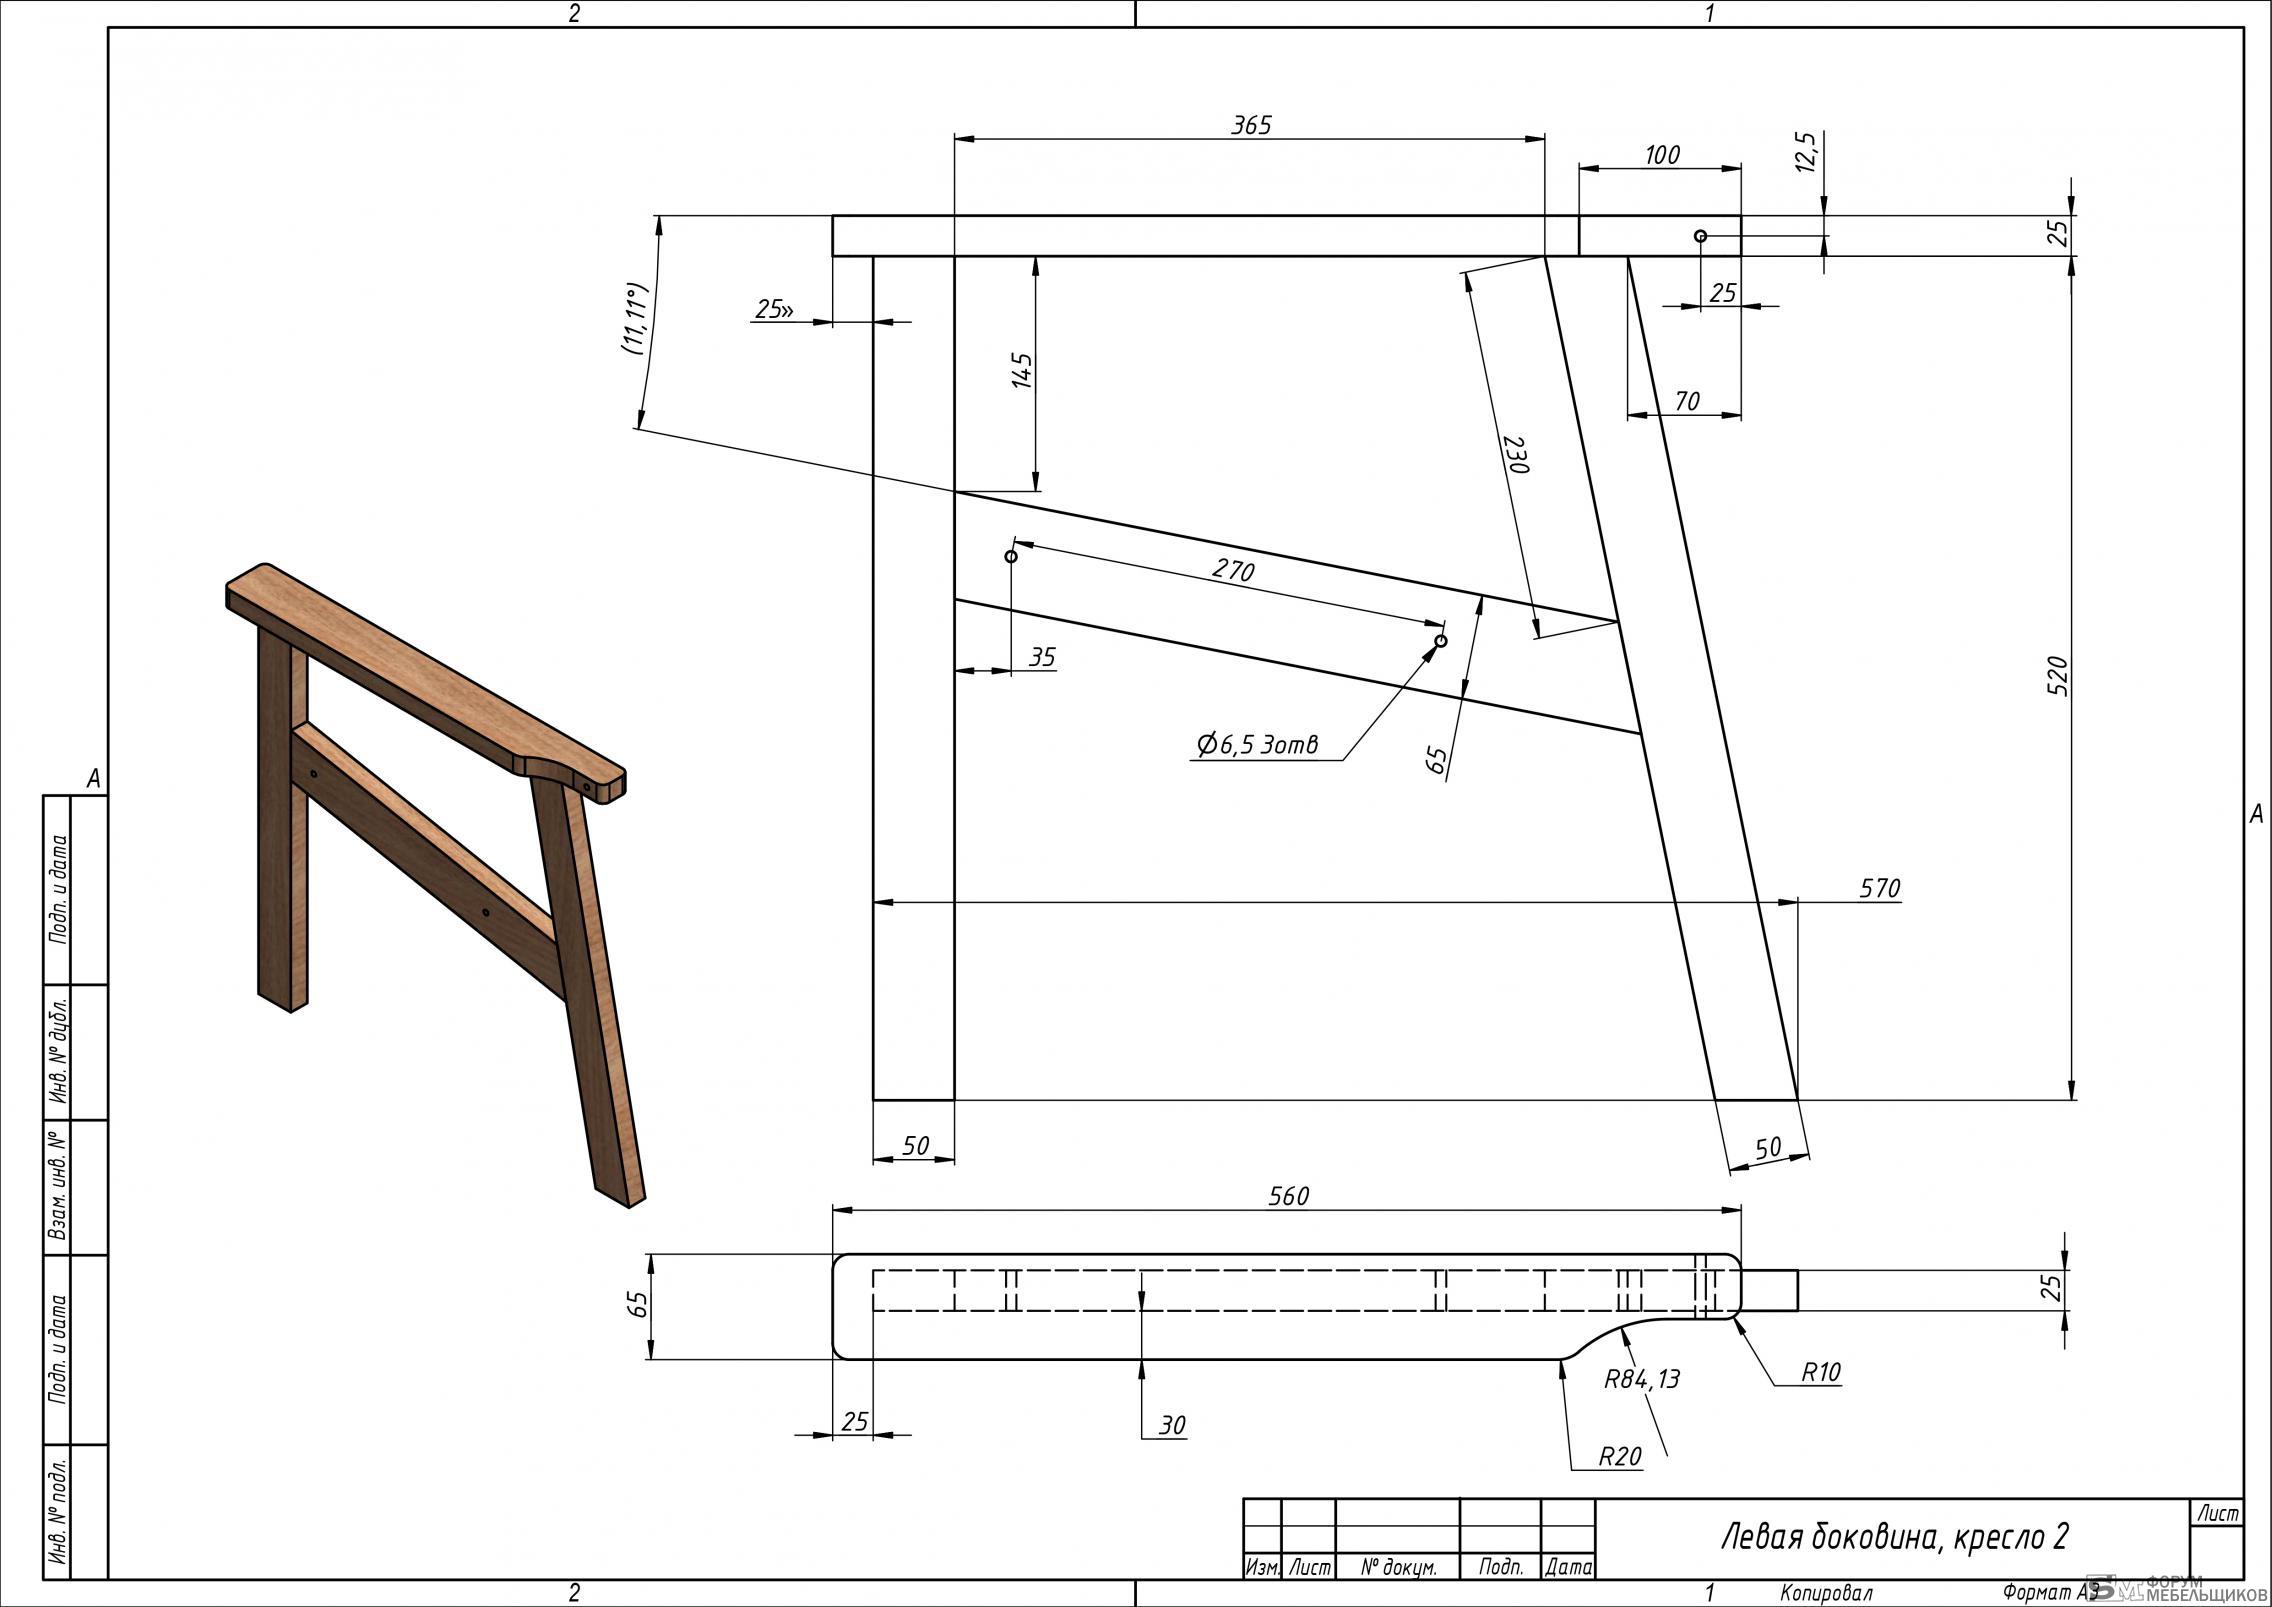 чертеж скамейки из дерева с размерами для дачи